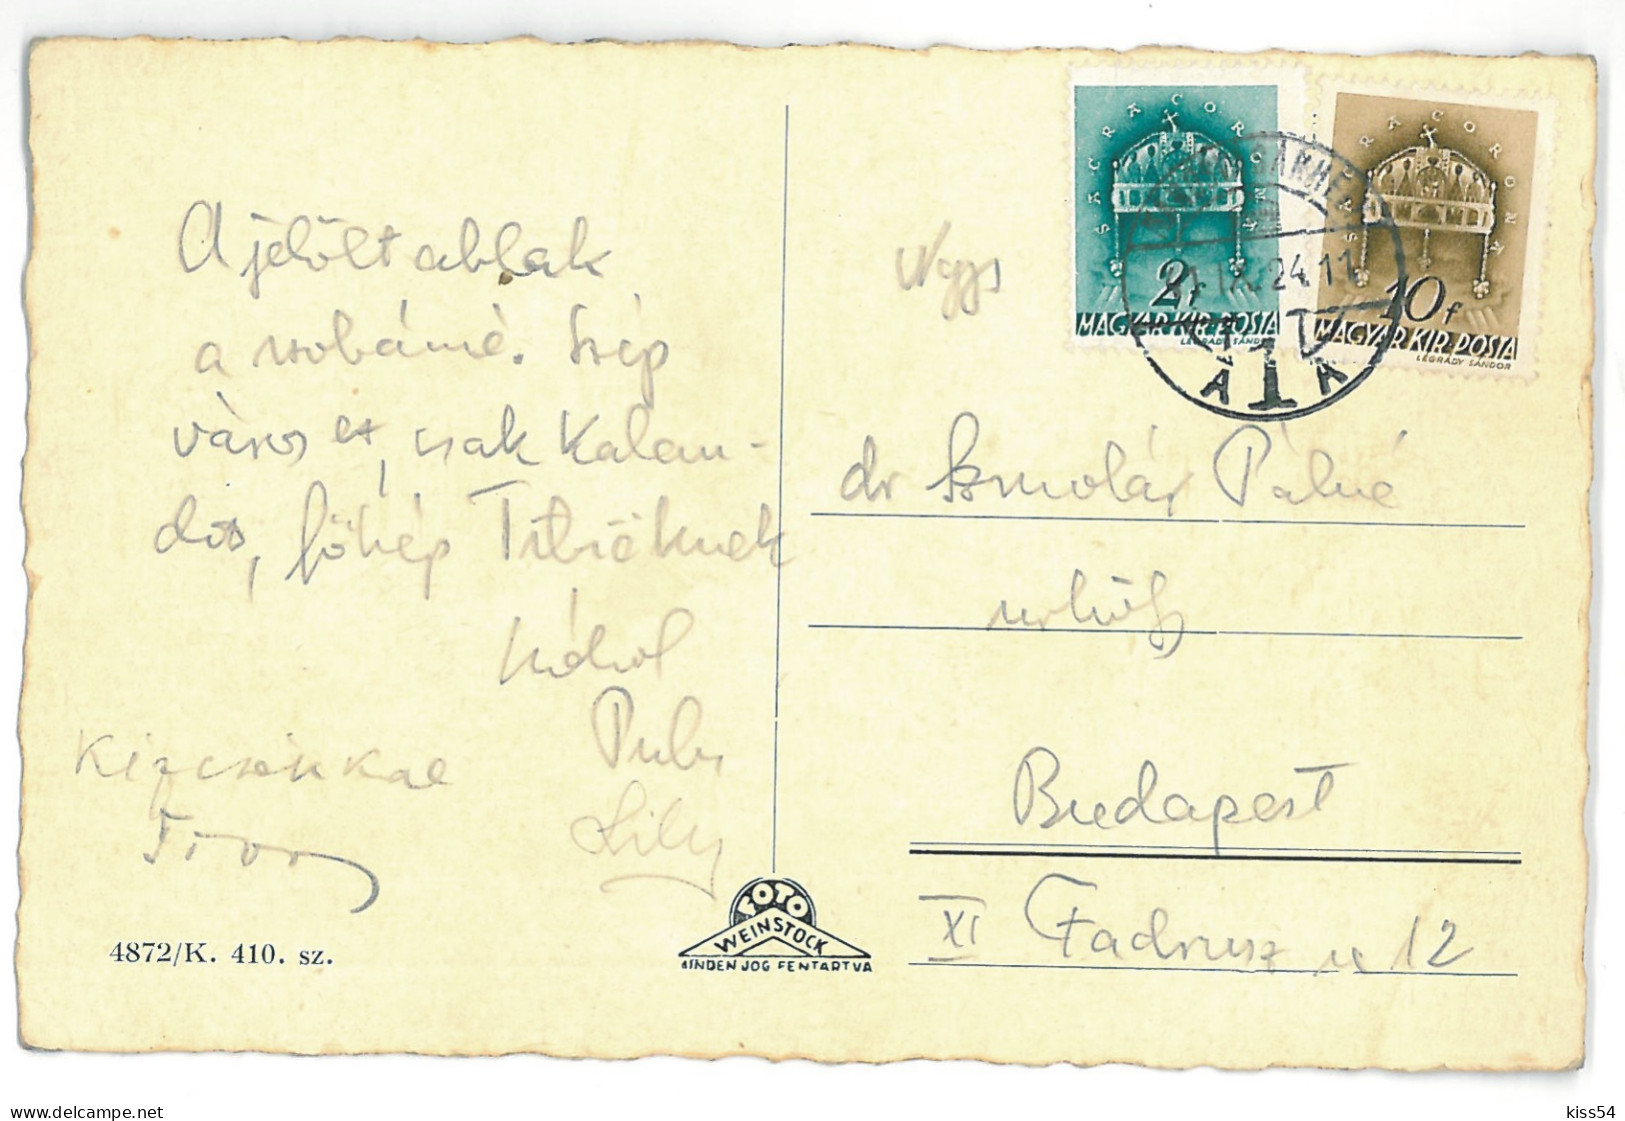 RO 45 - 14907 TARGU MURES, Market, Romania - Old Postcard - Used - 1941 - Rumänien